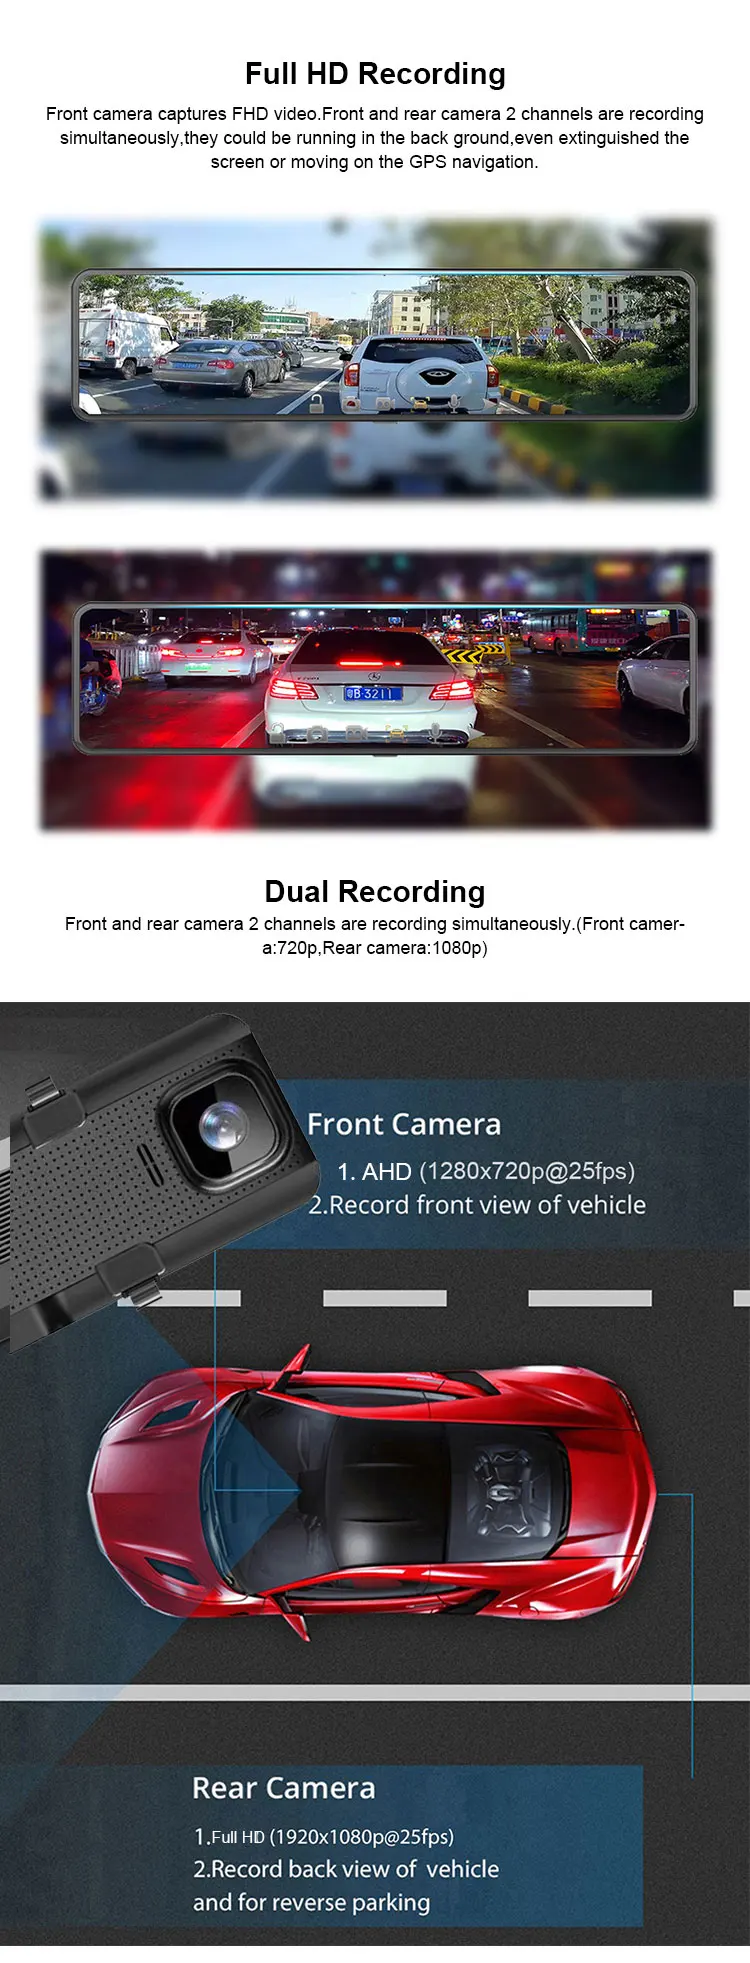 Hawkeye 12" rear view mirror 4G Android 8.1 car camera GPS Navigation 2G RAM 32G ROM ADAS FHD 1080P dash cam video recorder